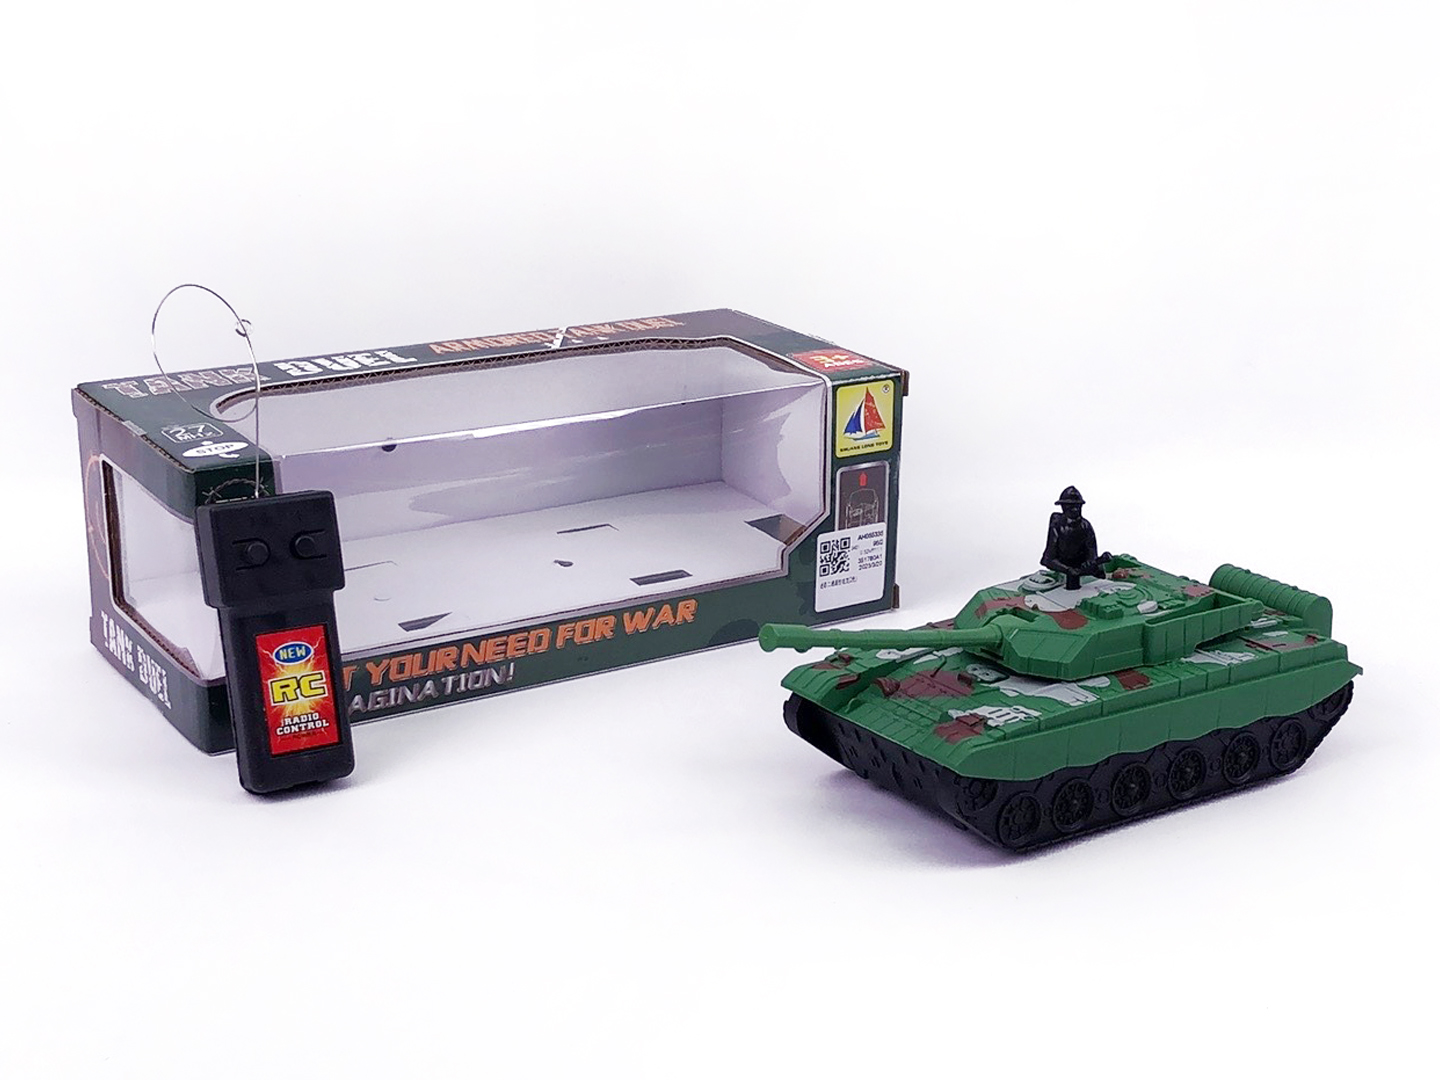 R/C Tank 2Ways(2C) toys